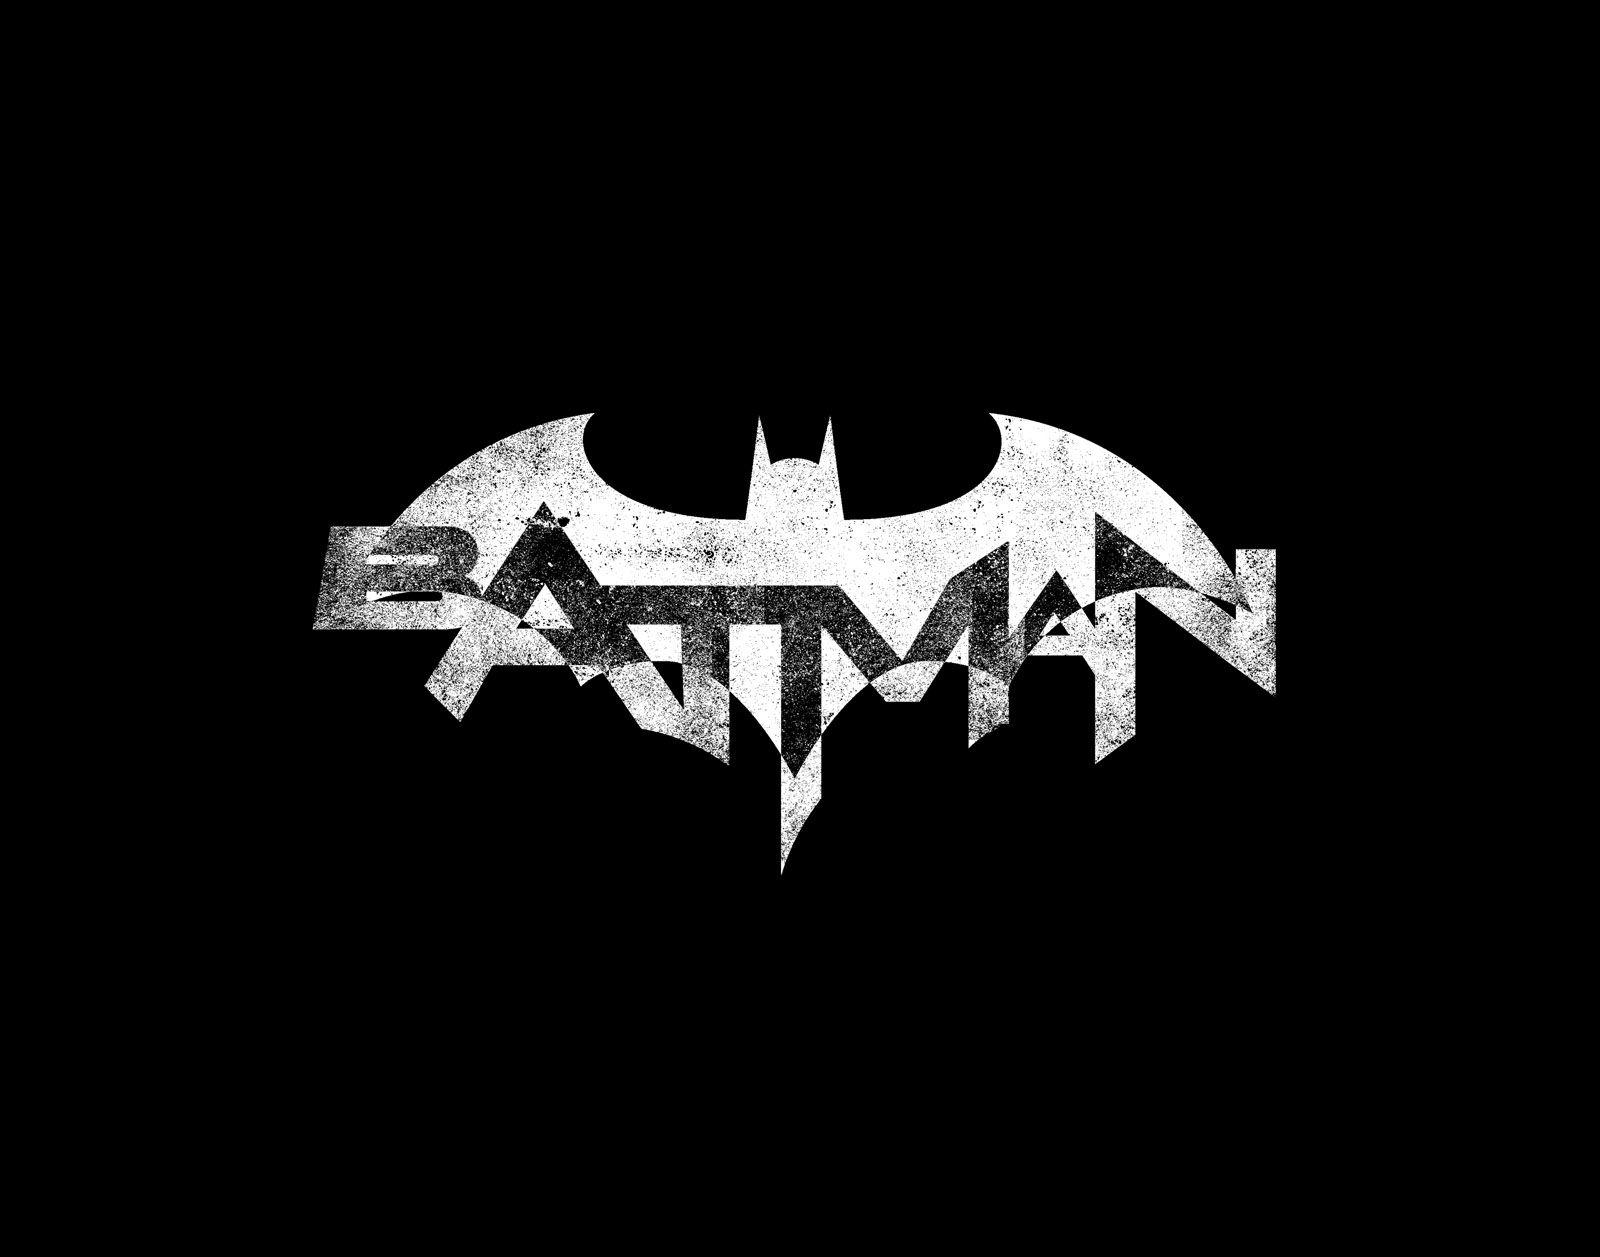 Broken Batman Logo - Best Batman- Jpg Jpeg Image